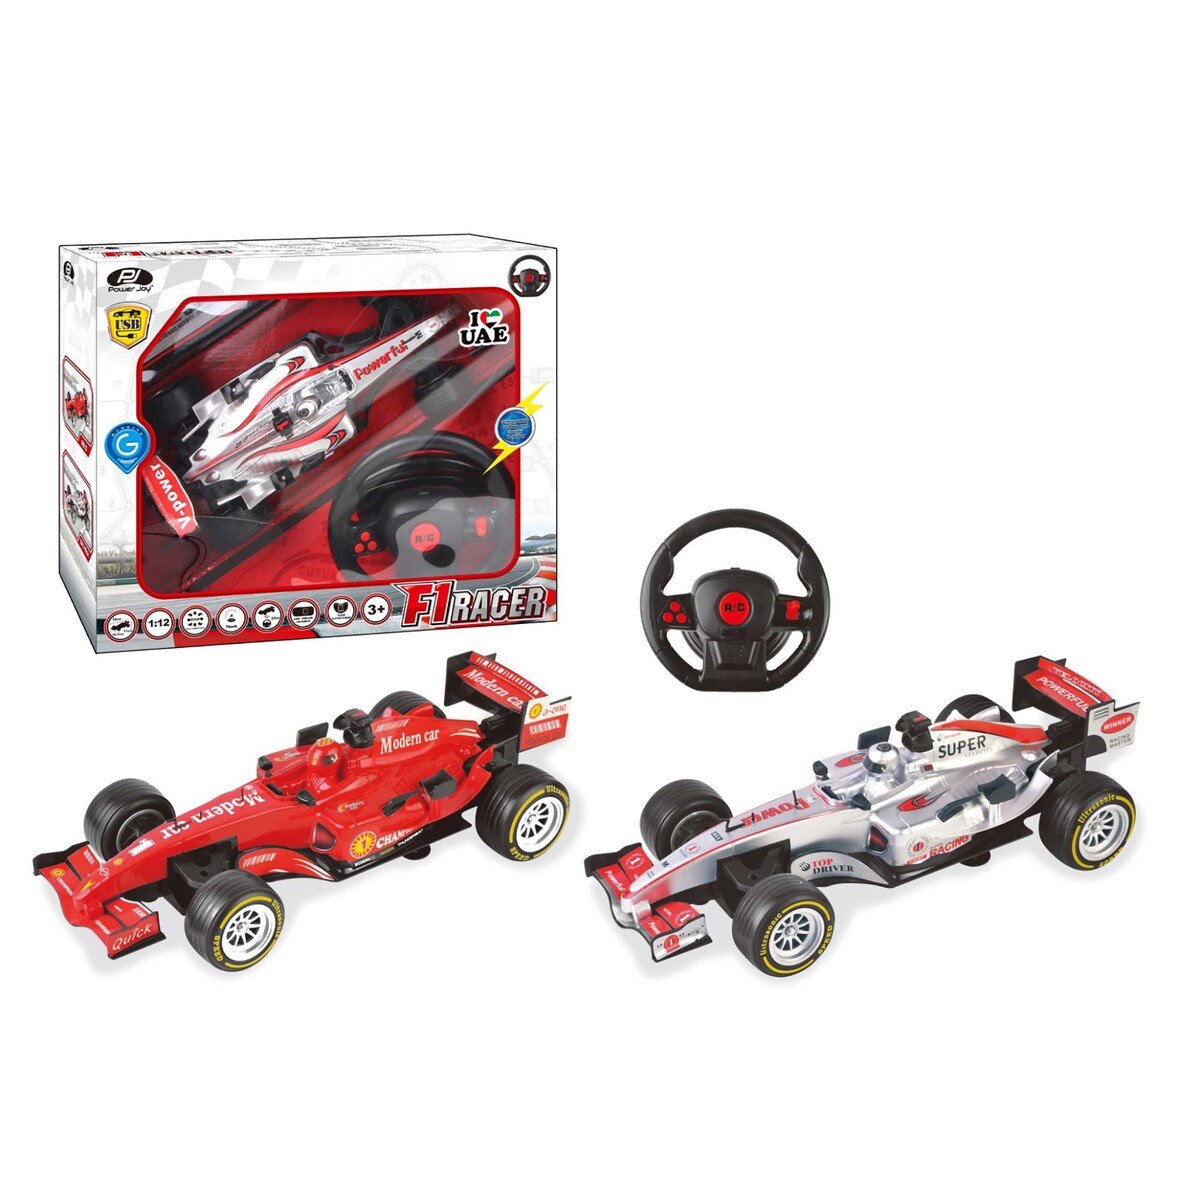 Power Joy R/C F1 Model Racing Car CRC136 Assorted Color